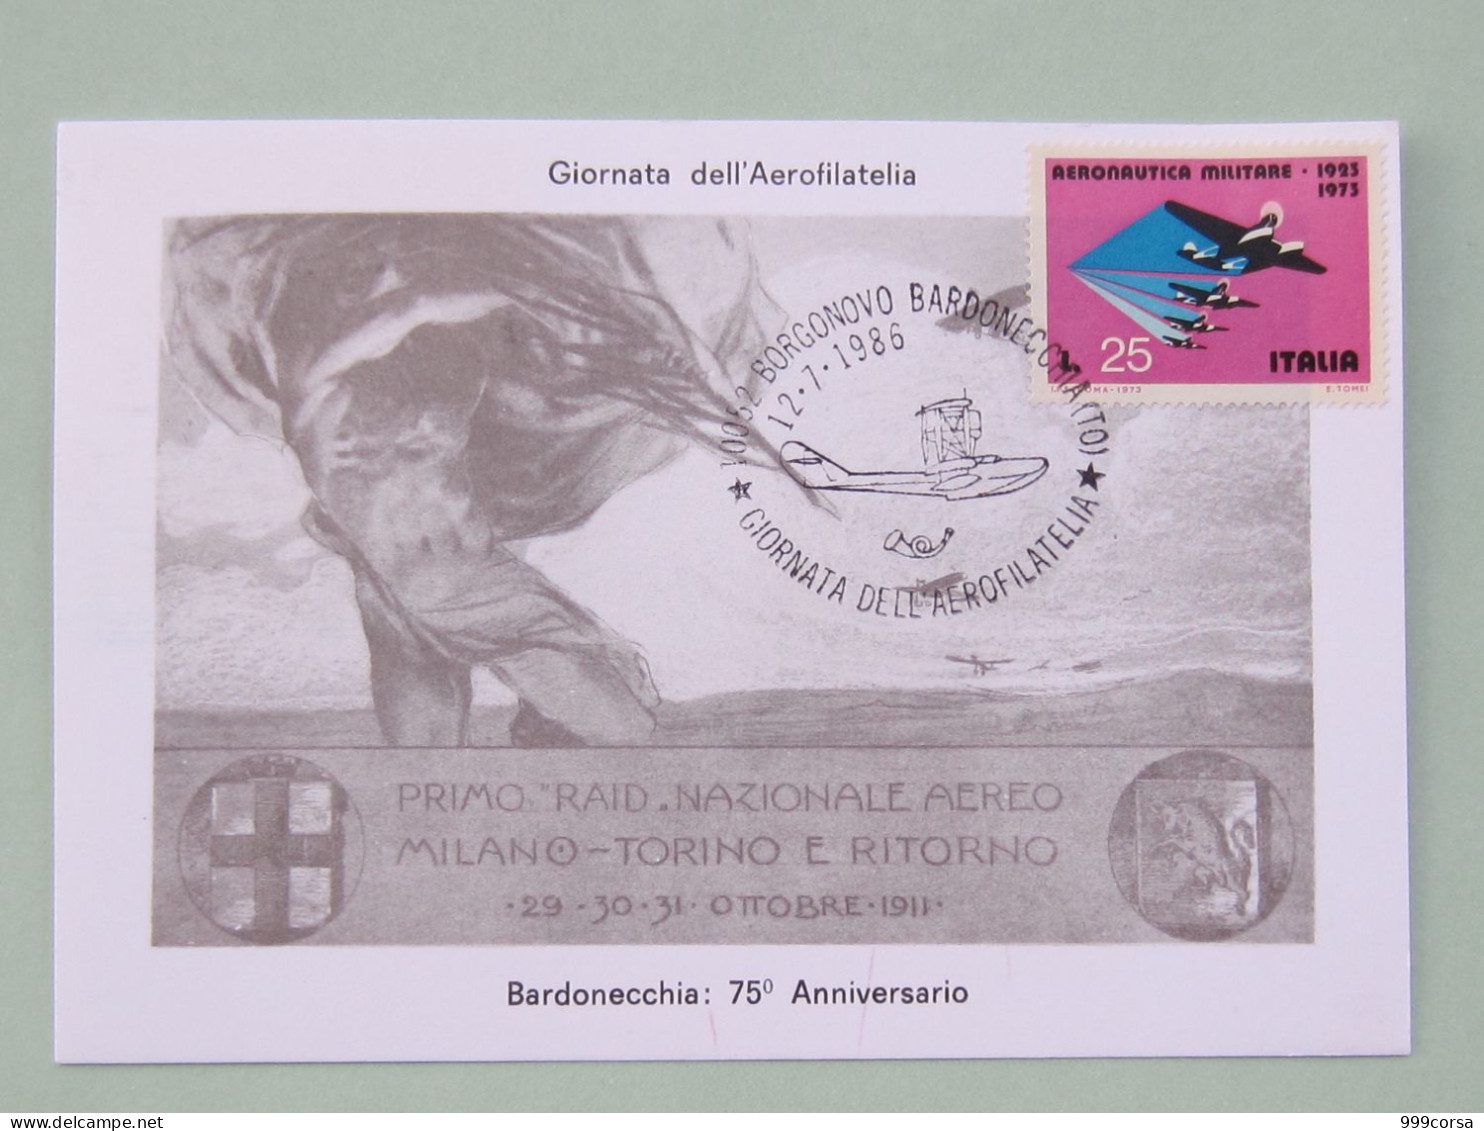 Italia, Trasporti Aerei, Aereo Macchi M-71, Ann. Spec. 12-7-1986, Giornata Aerofilatelia,Borgonovo Bardonecchia (A)2scan - Other (Air)